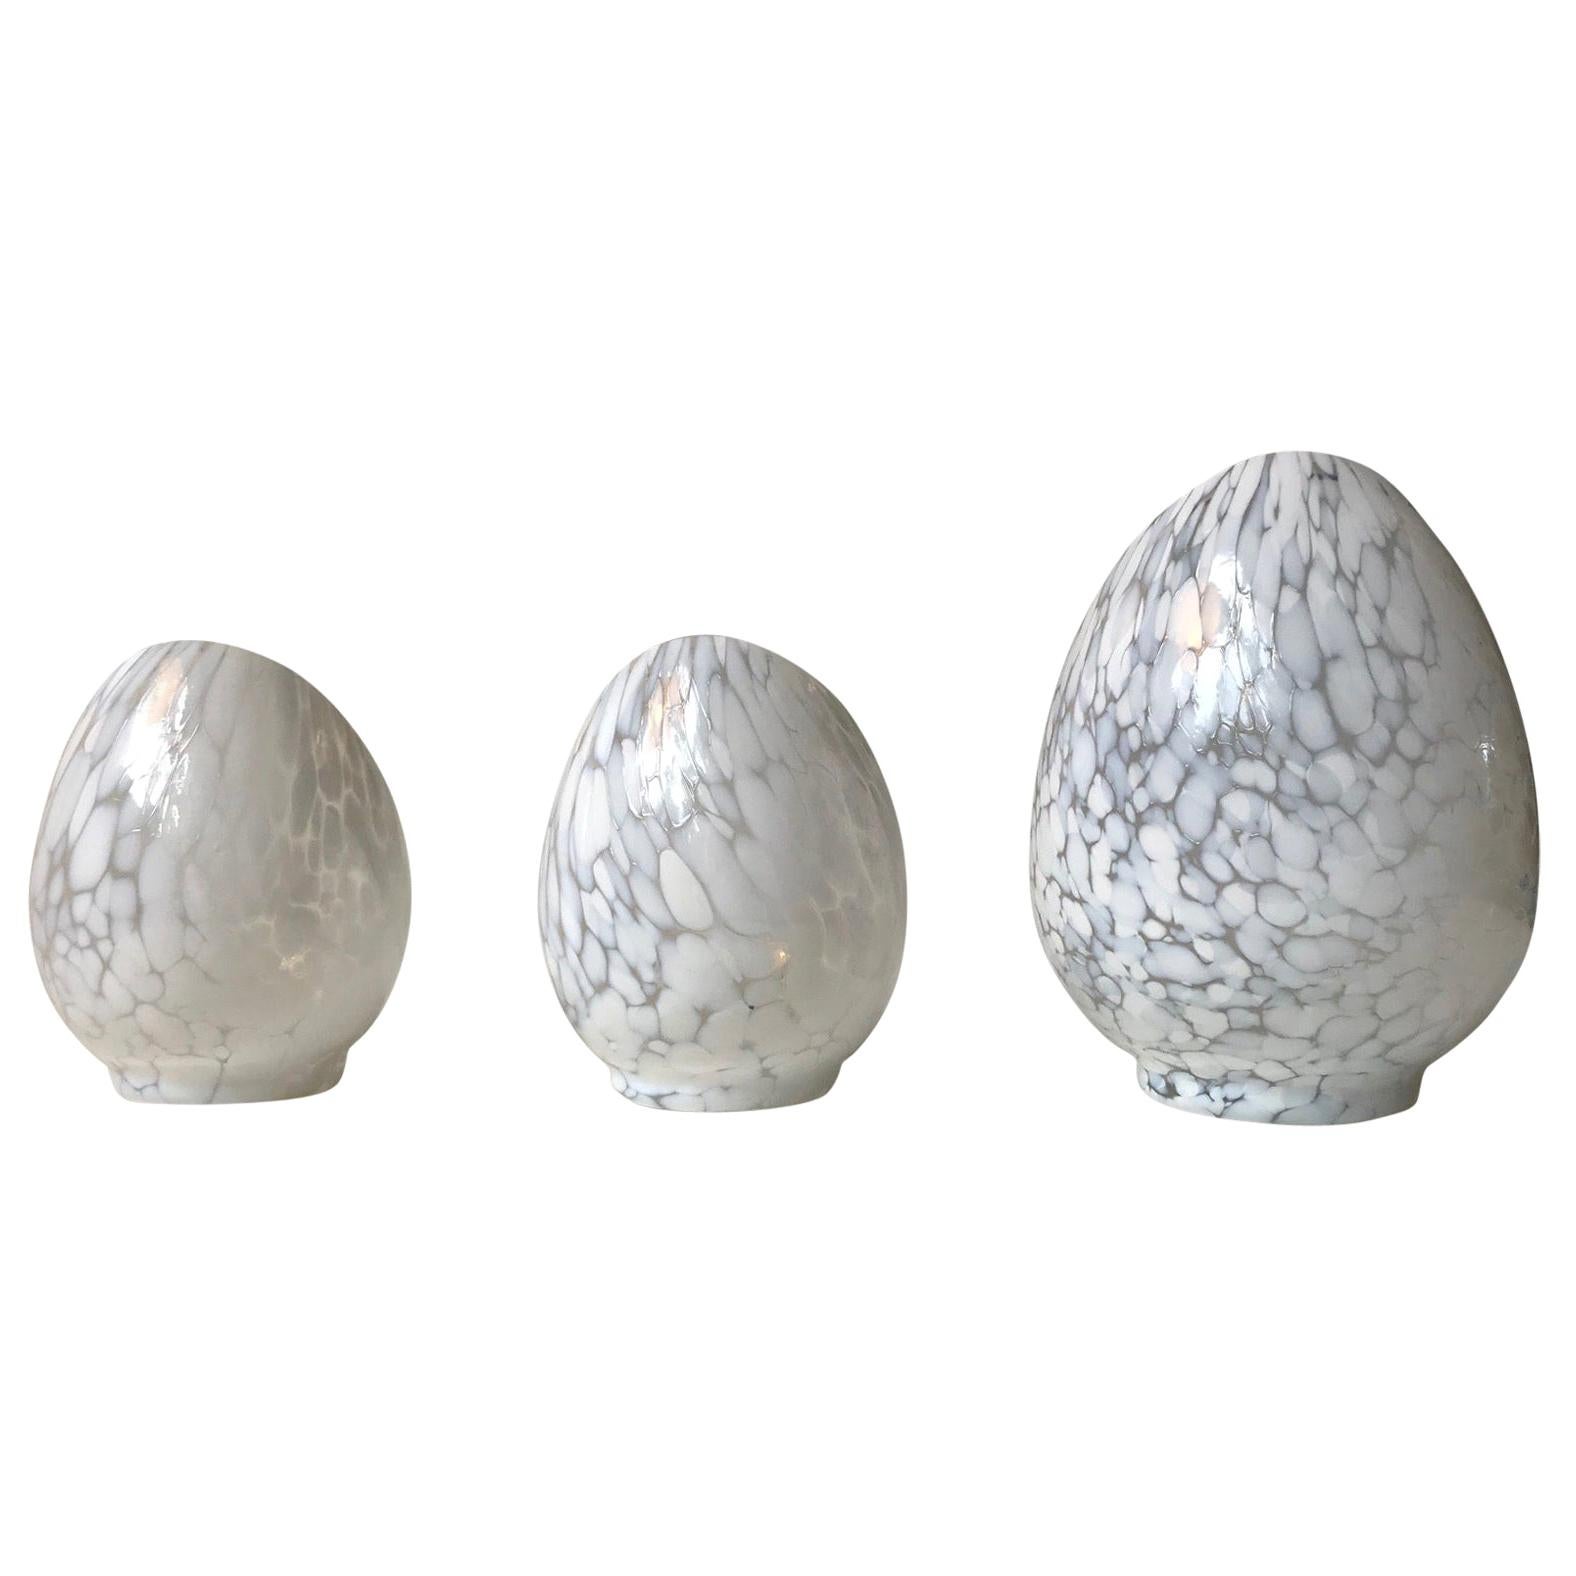 Trio of Vintage Egg Shaped Blister Glass Candleholders by Ingegerd Råman For Sale